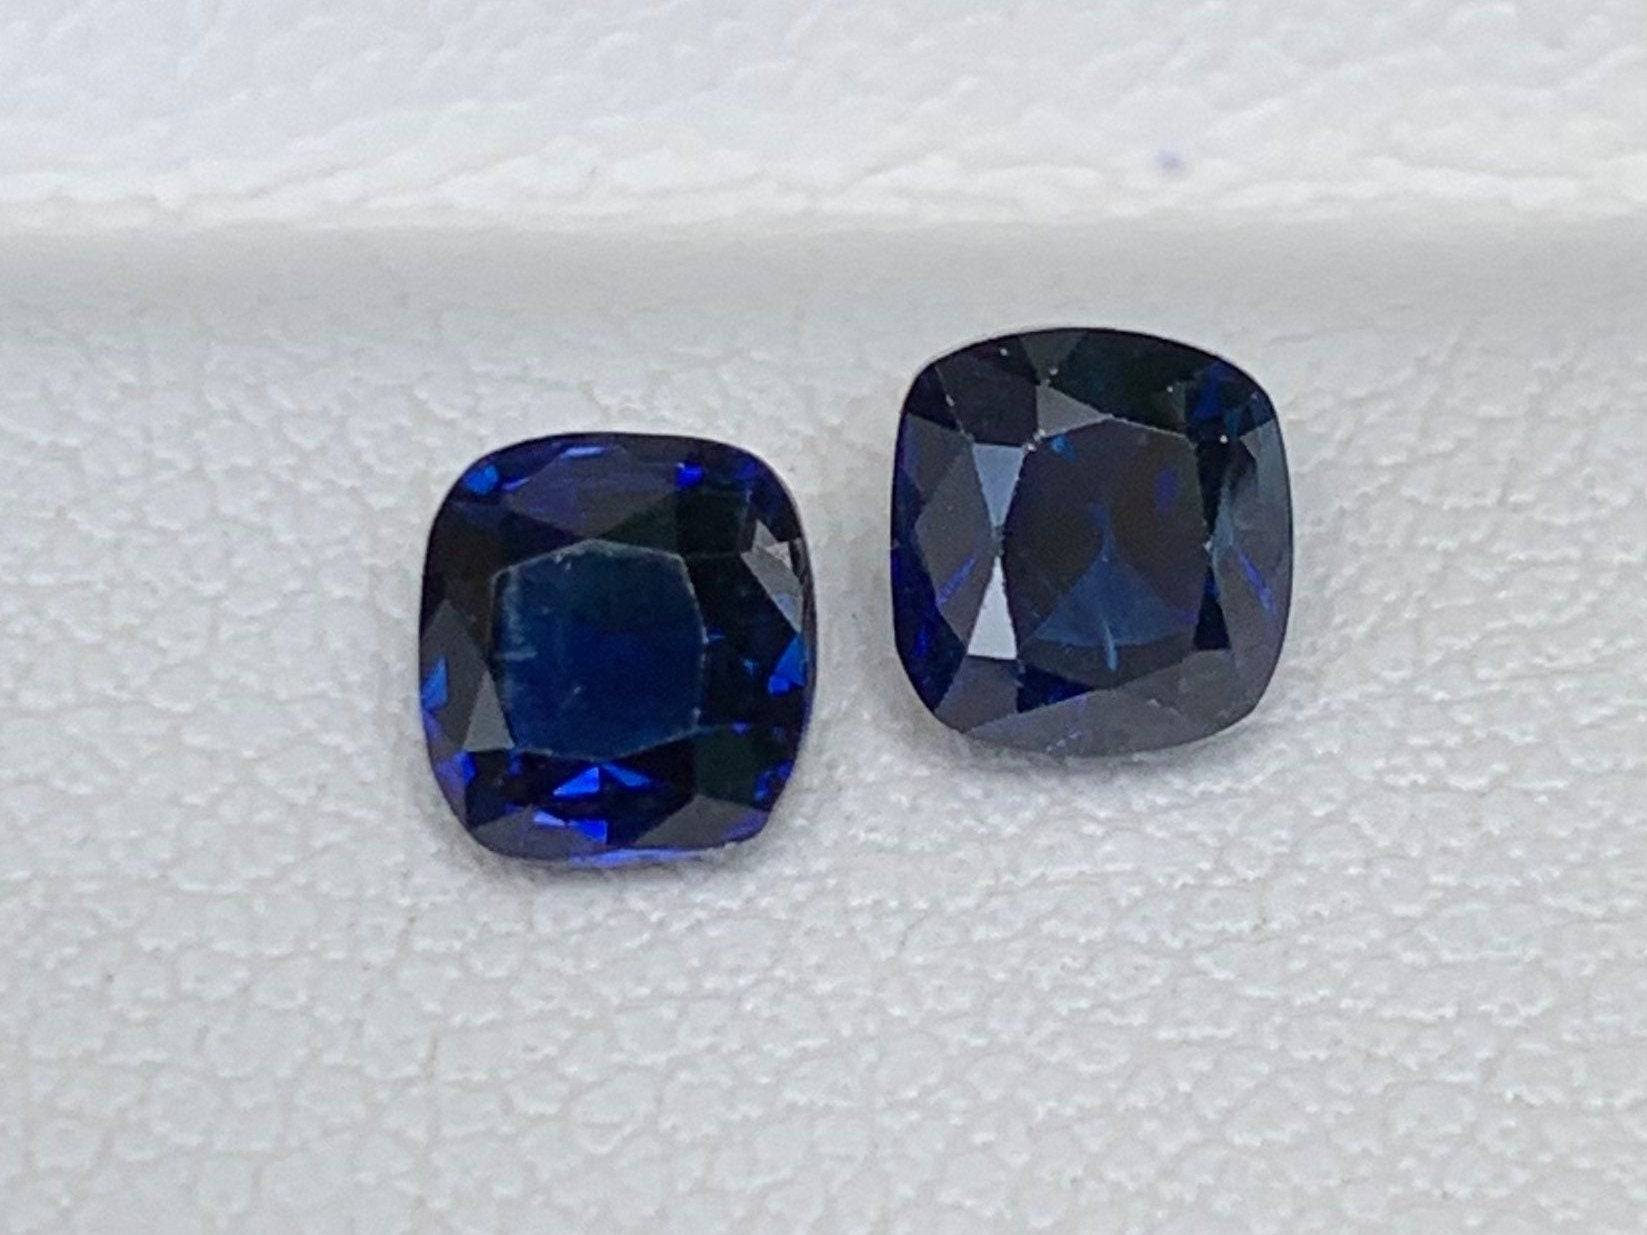 1.81 Cts Natural Blue Sapphire Pair - (H) - Baza Boutique 